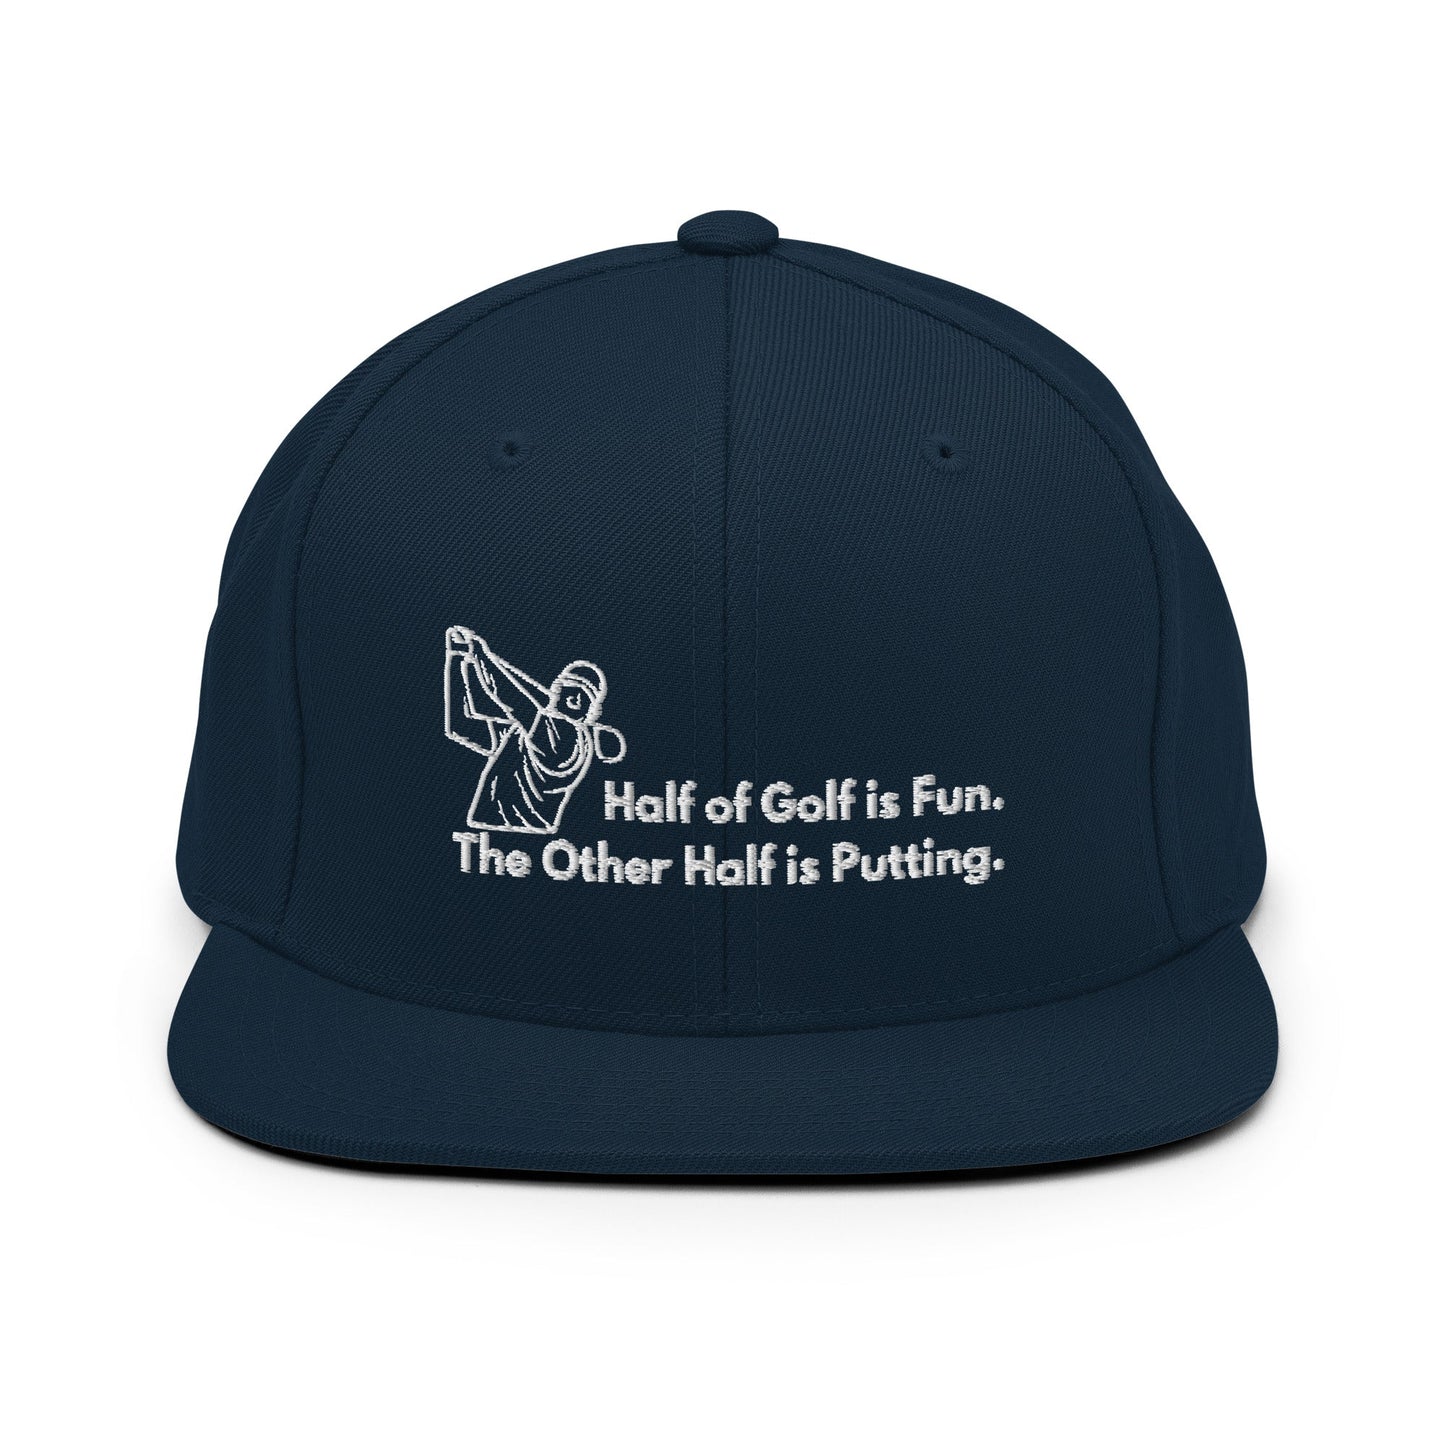 Funny Golfer Gifts  Snapback Hat Dark Navy Half of Golf is Fun Snapback Hat